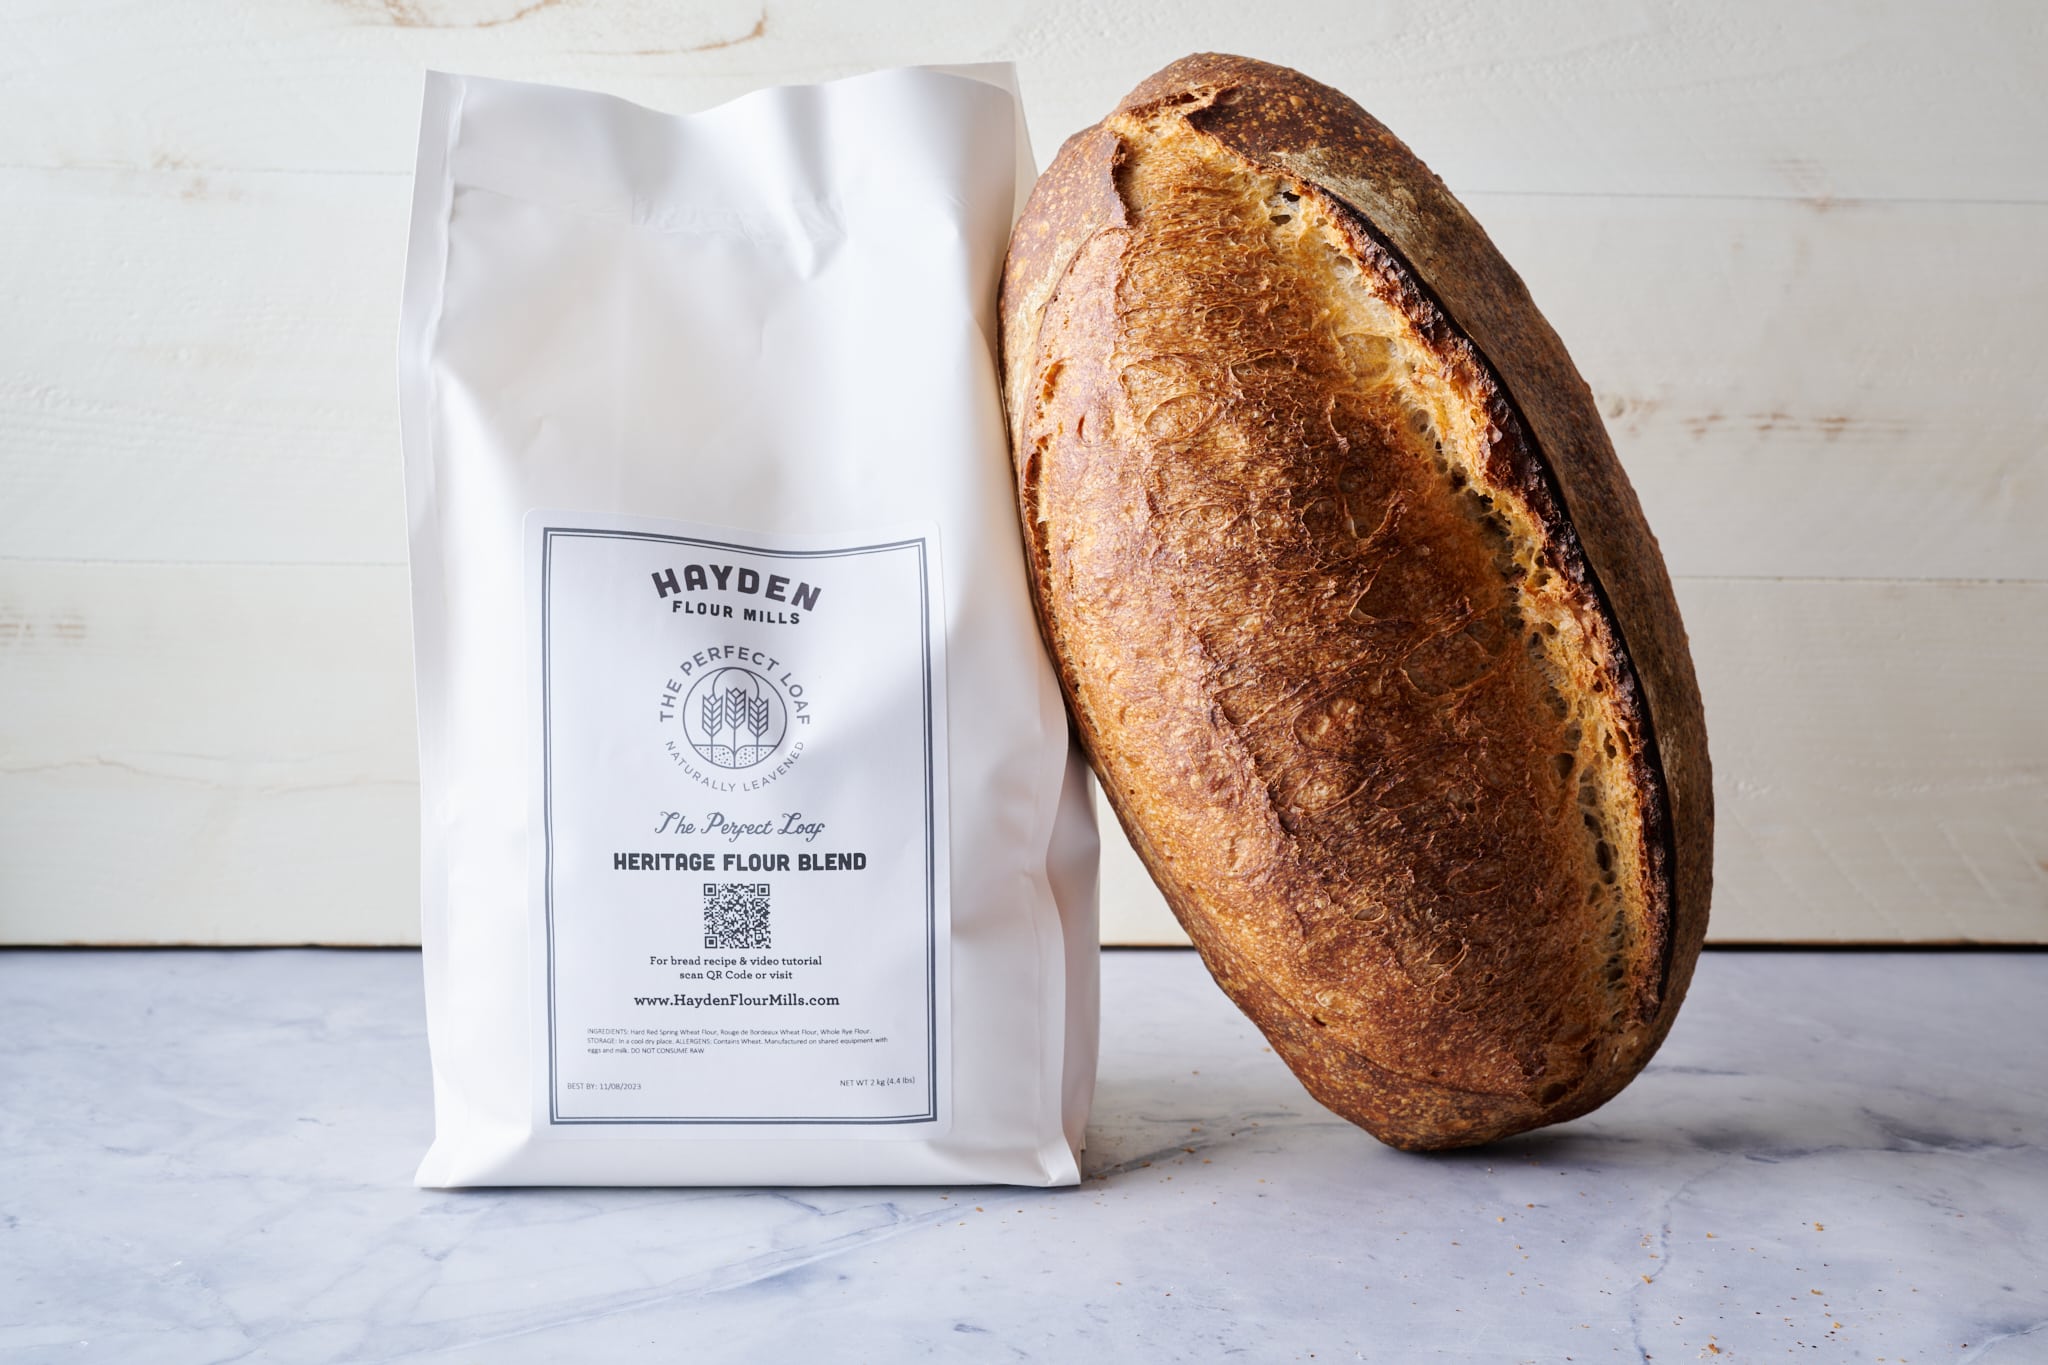 King Arthur Flour Whole Grain Baking: Delicious Recipes Using Nutritious Whole Grains [Book]